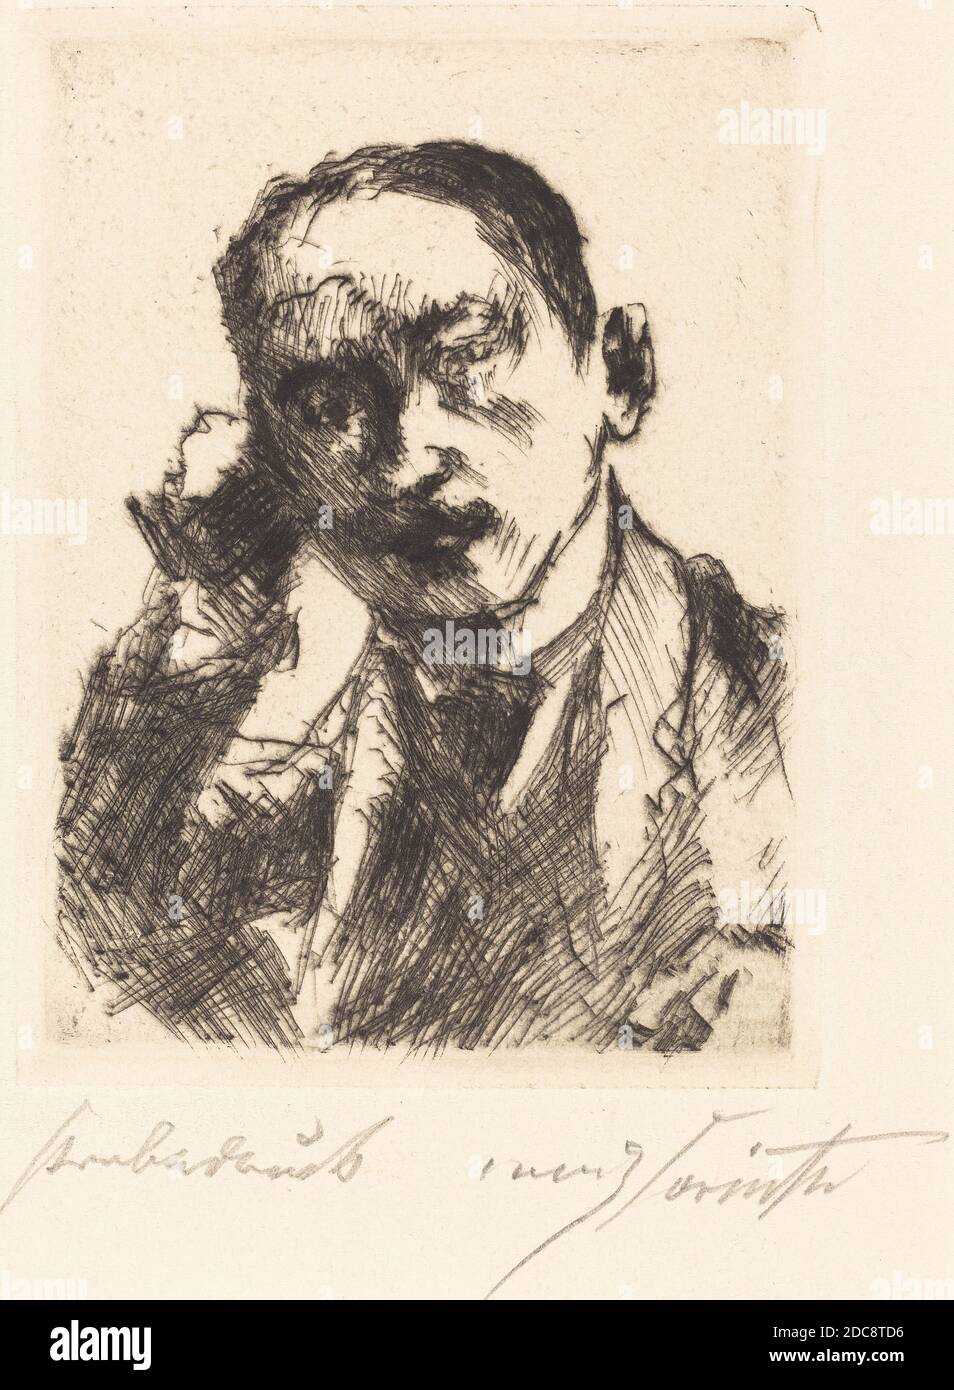 Lovis Corinth, (artist), German, 1858 - 1925, Fritz Gurlitt, (publisher), German, 1854 - 1893, Bildnis K.S. (Portrait of K.S.), 1920, drypoint in black on wove paper, plate: 11.9 x 8.8 cm (4 11/16 x 3 7/16 in.), sheet: 27.2 x 20 cm (10 11/16 x 7 7/8 in Stock Photo